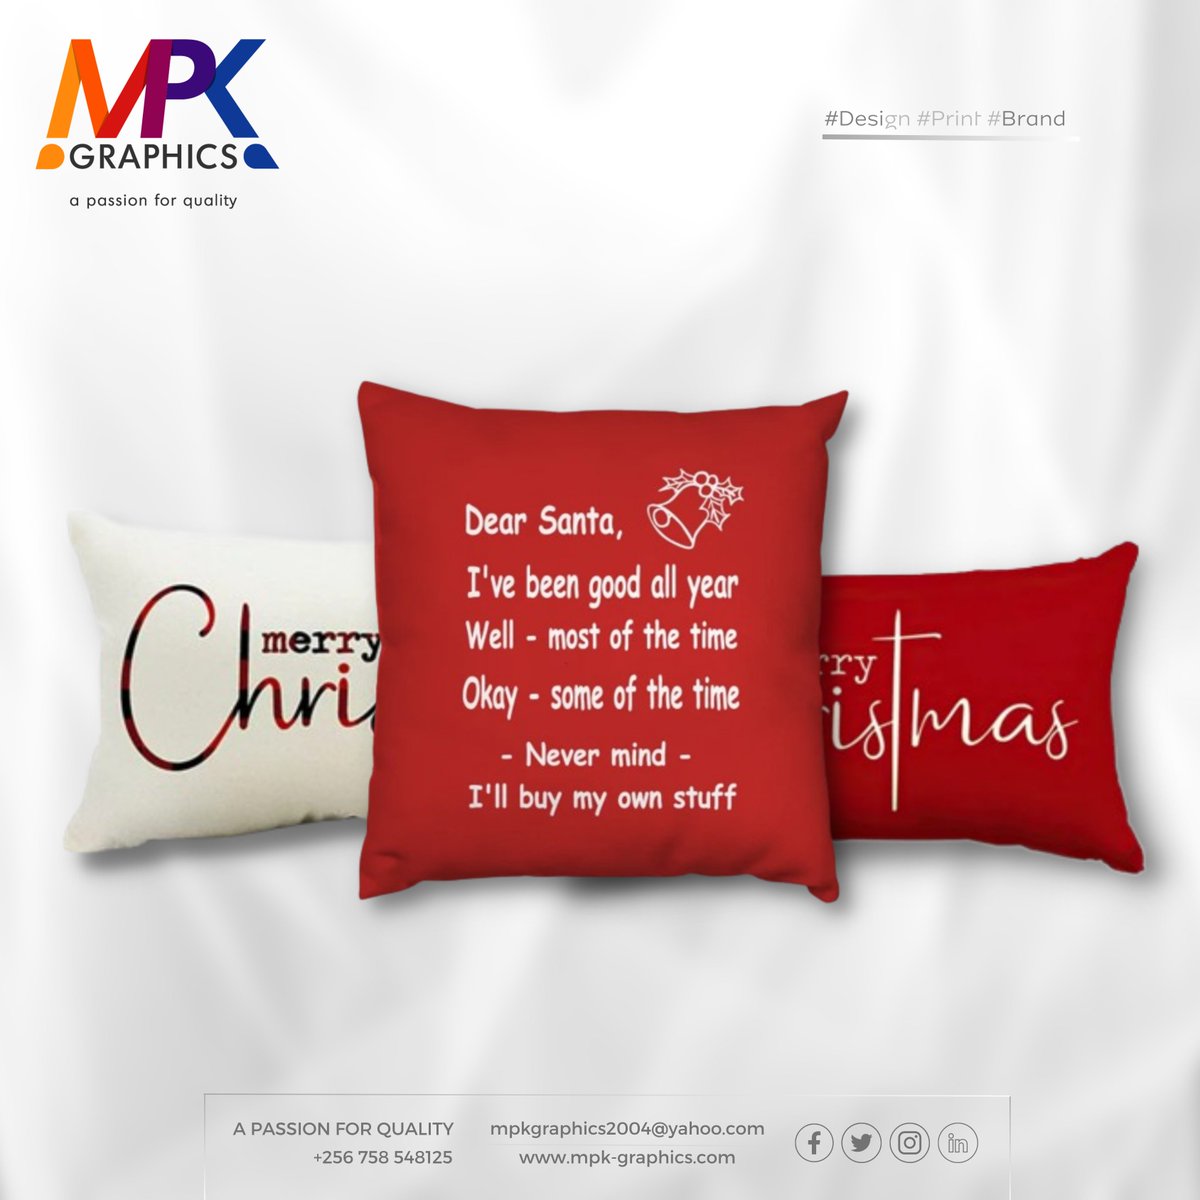 Print your loved ones a fun design meme or joke to make their Christmas colorful! #design #print #BRAND mpk-graphics.com